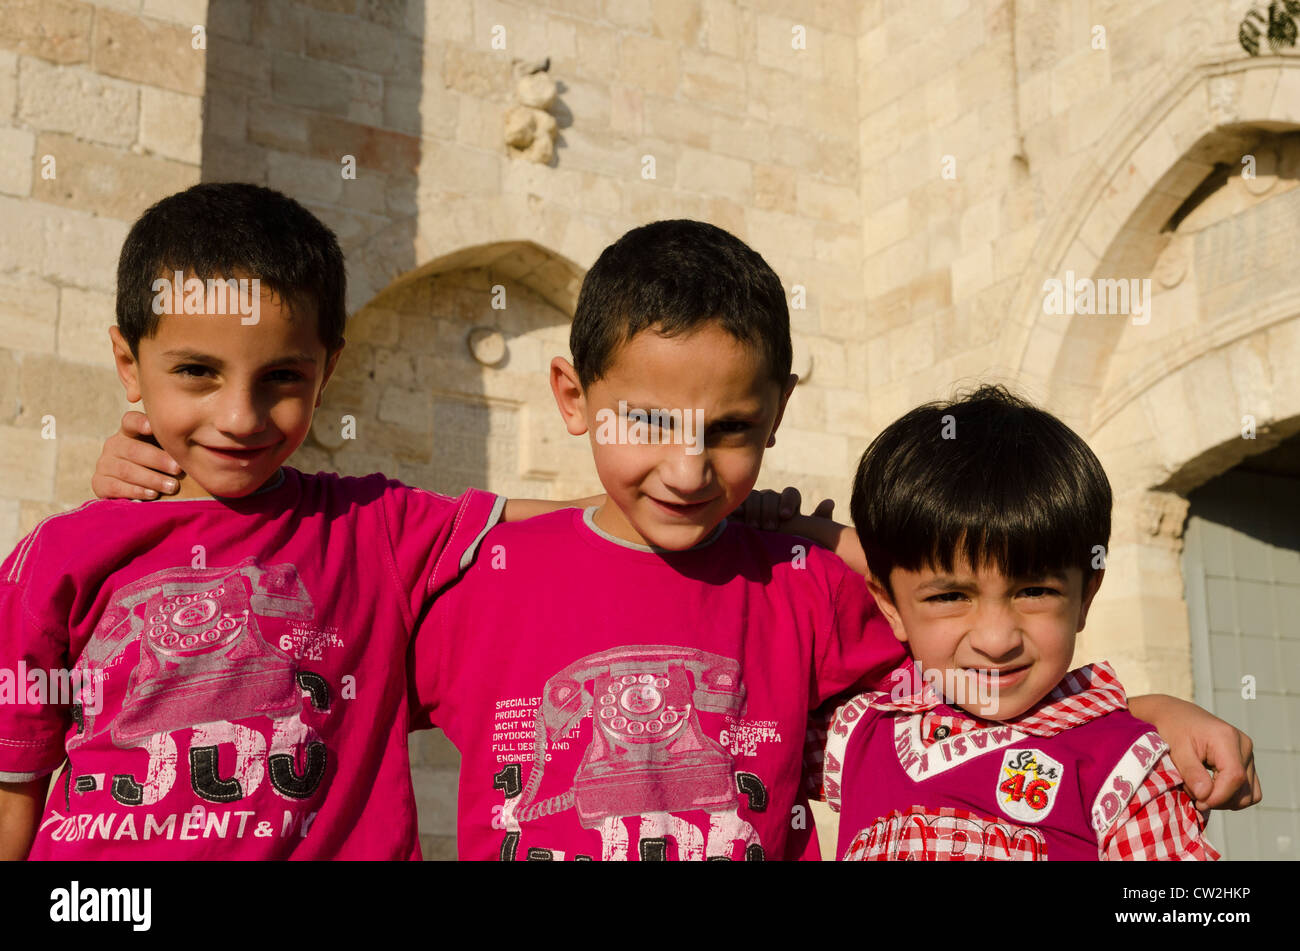 Portrait of 3 young Palestinian boys at Jaffa gate. Jerusalem Old City. israel Stock Photo